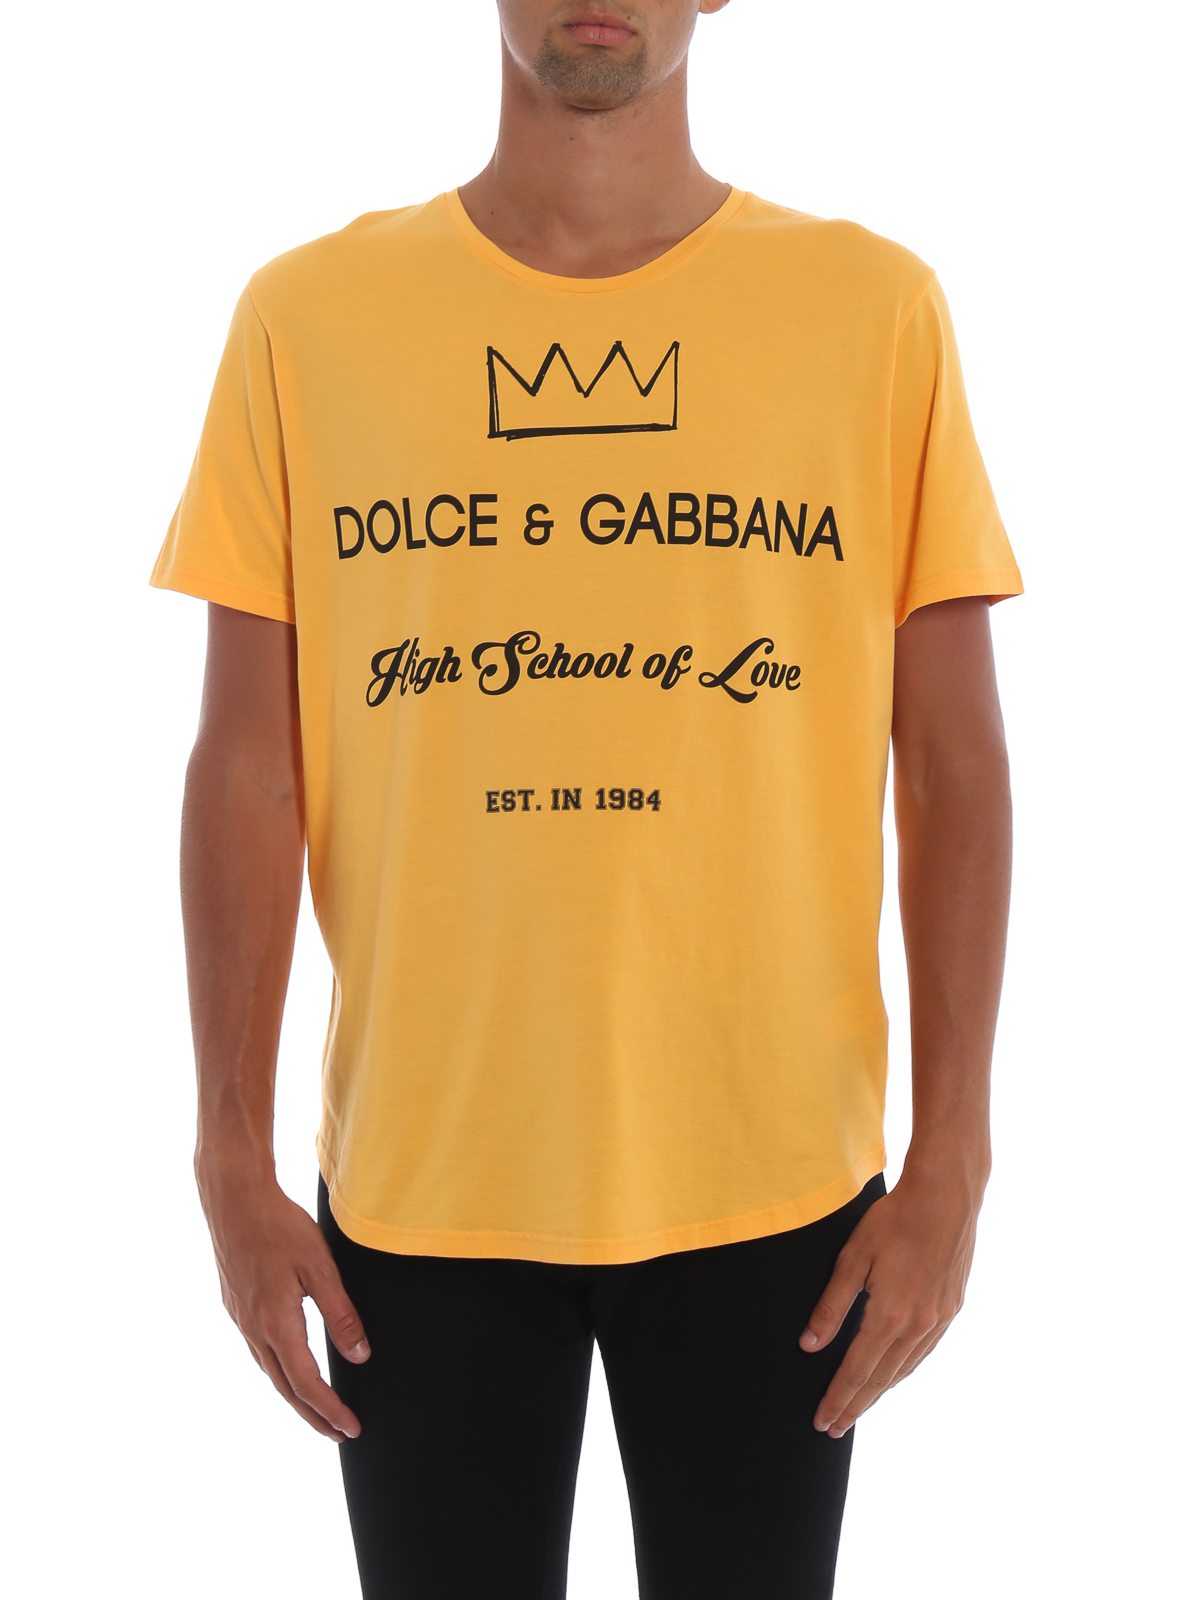 dolce and gabbana t